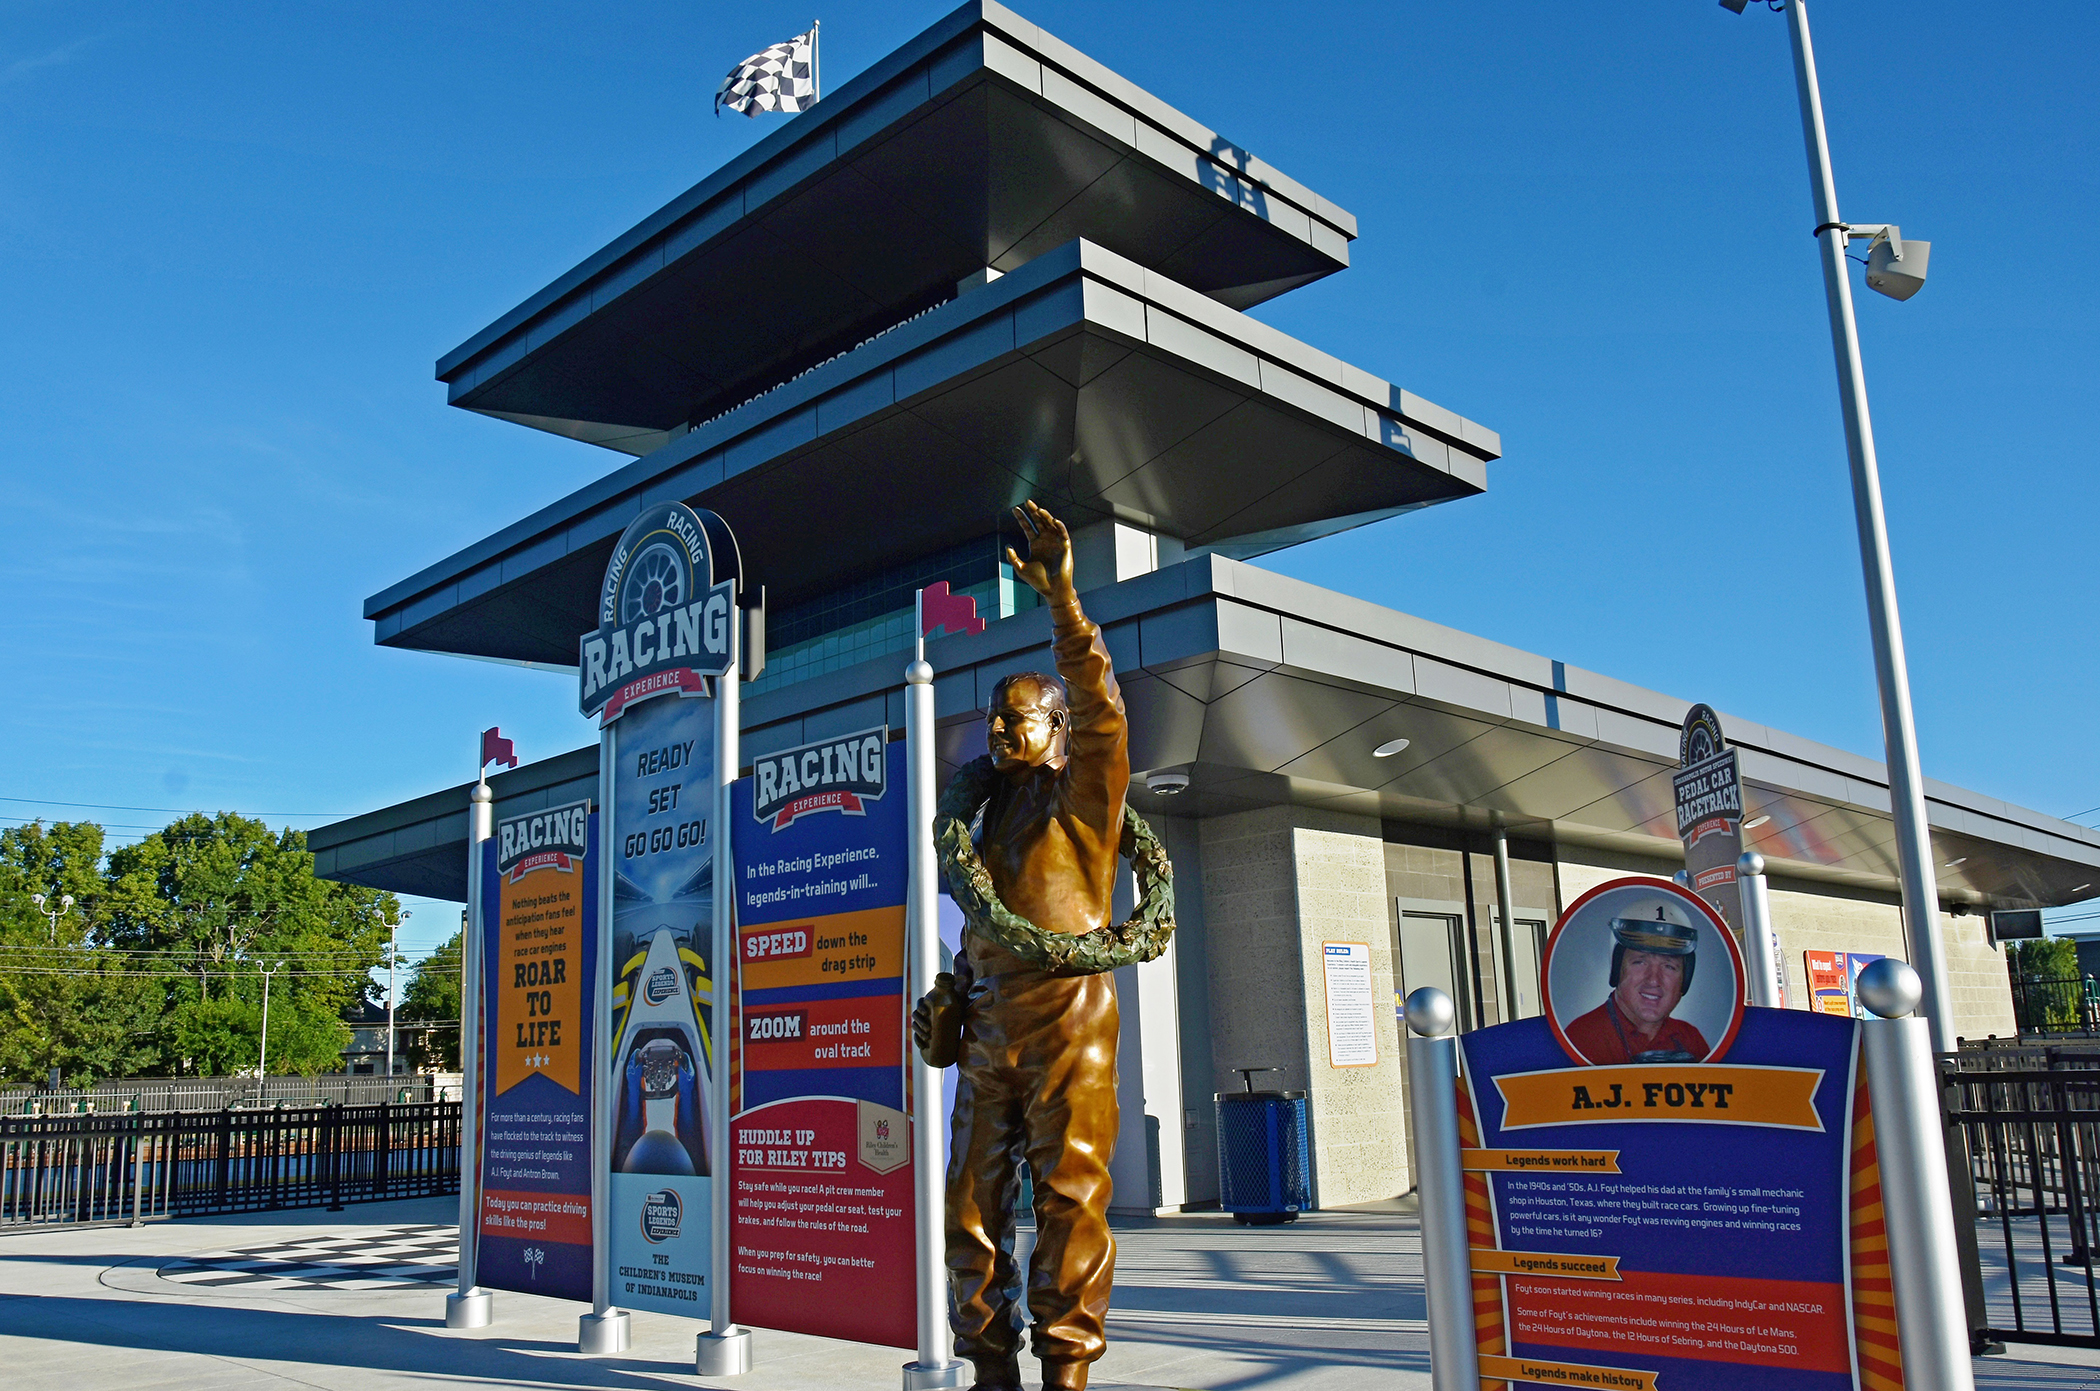 A.J. Foyt bronze sculpture next to miniature Indianapolis Motor Speedway pagoda